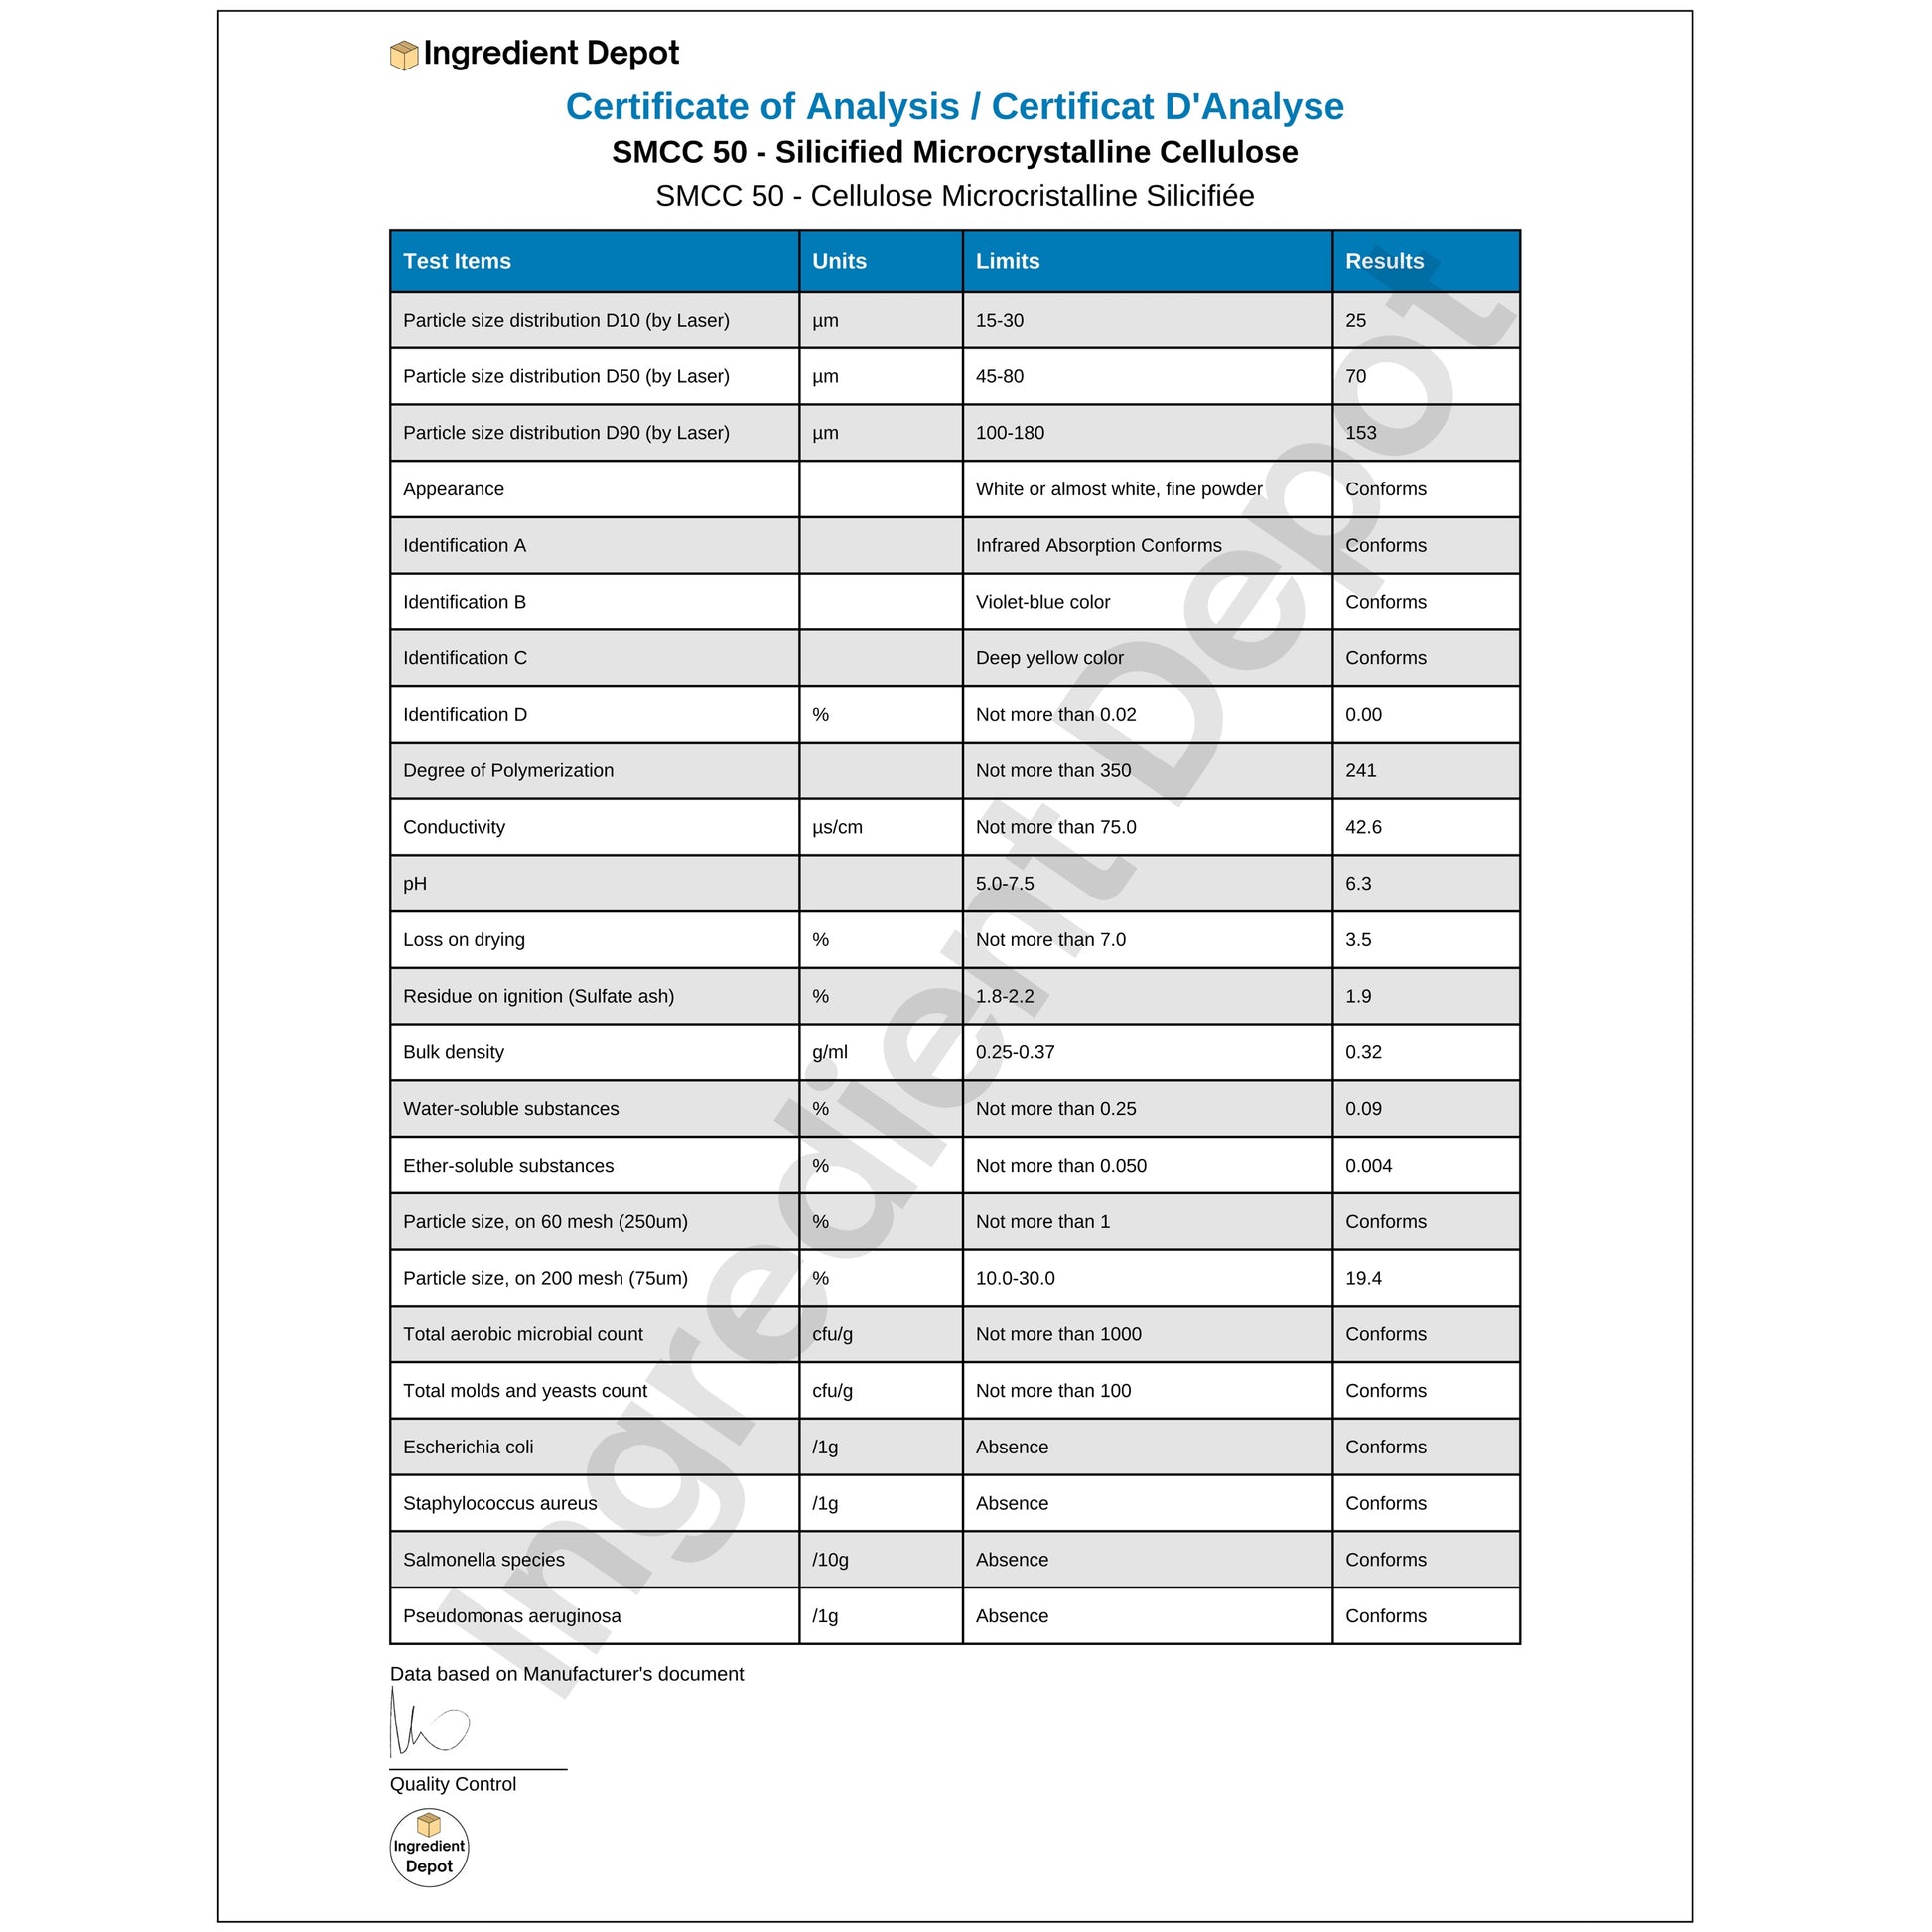 SMCC 50 Silicified Microcrystalline Cellulose - USP/NF Grade 1 kg - Ingredient Depot